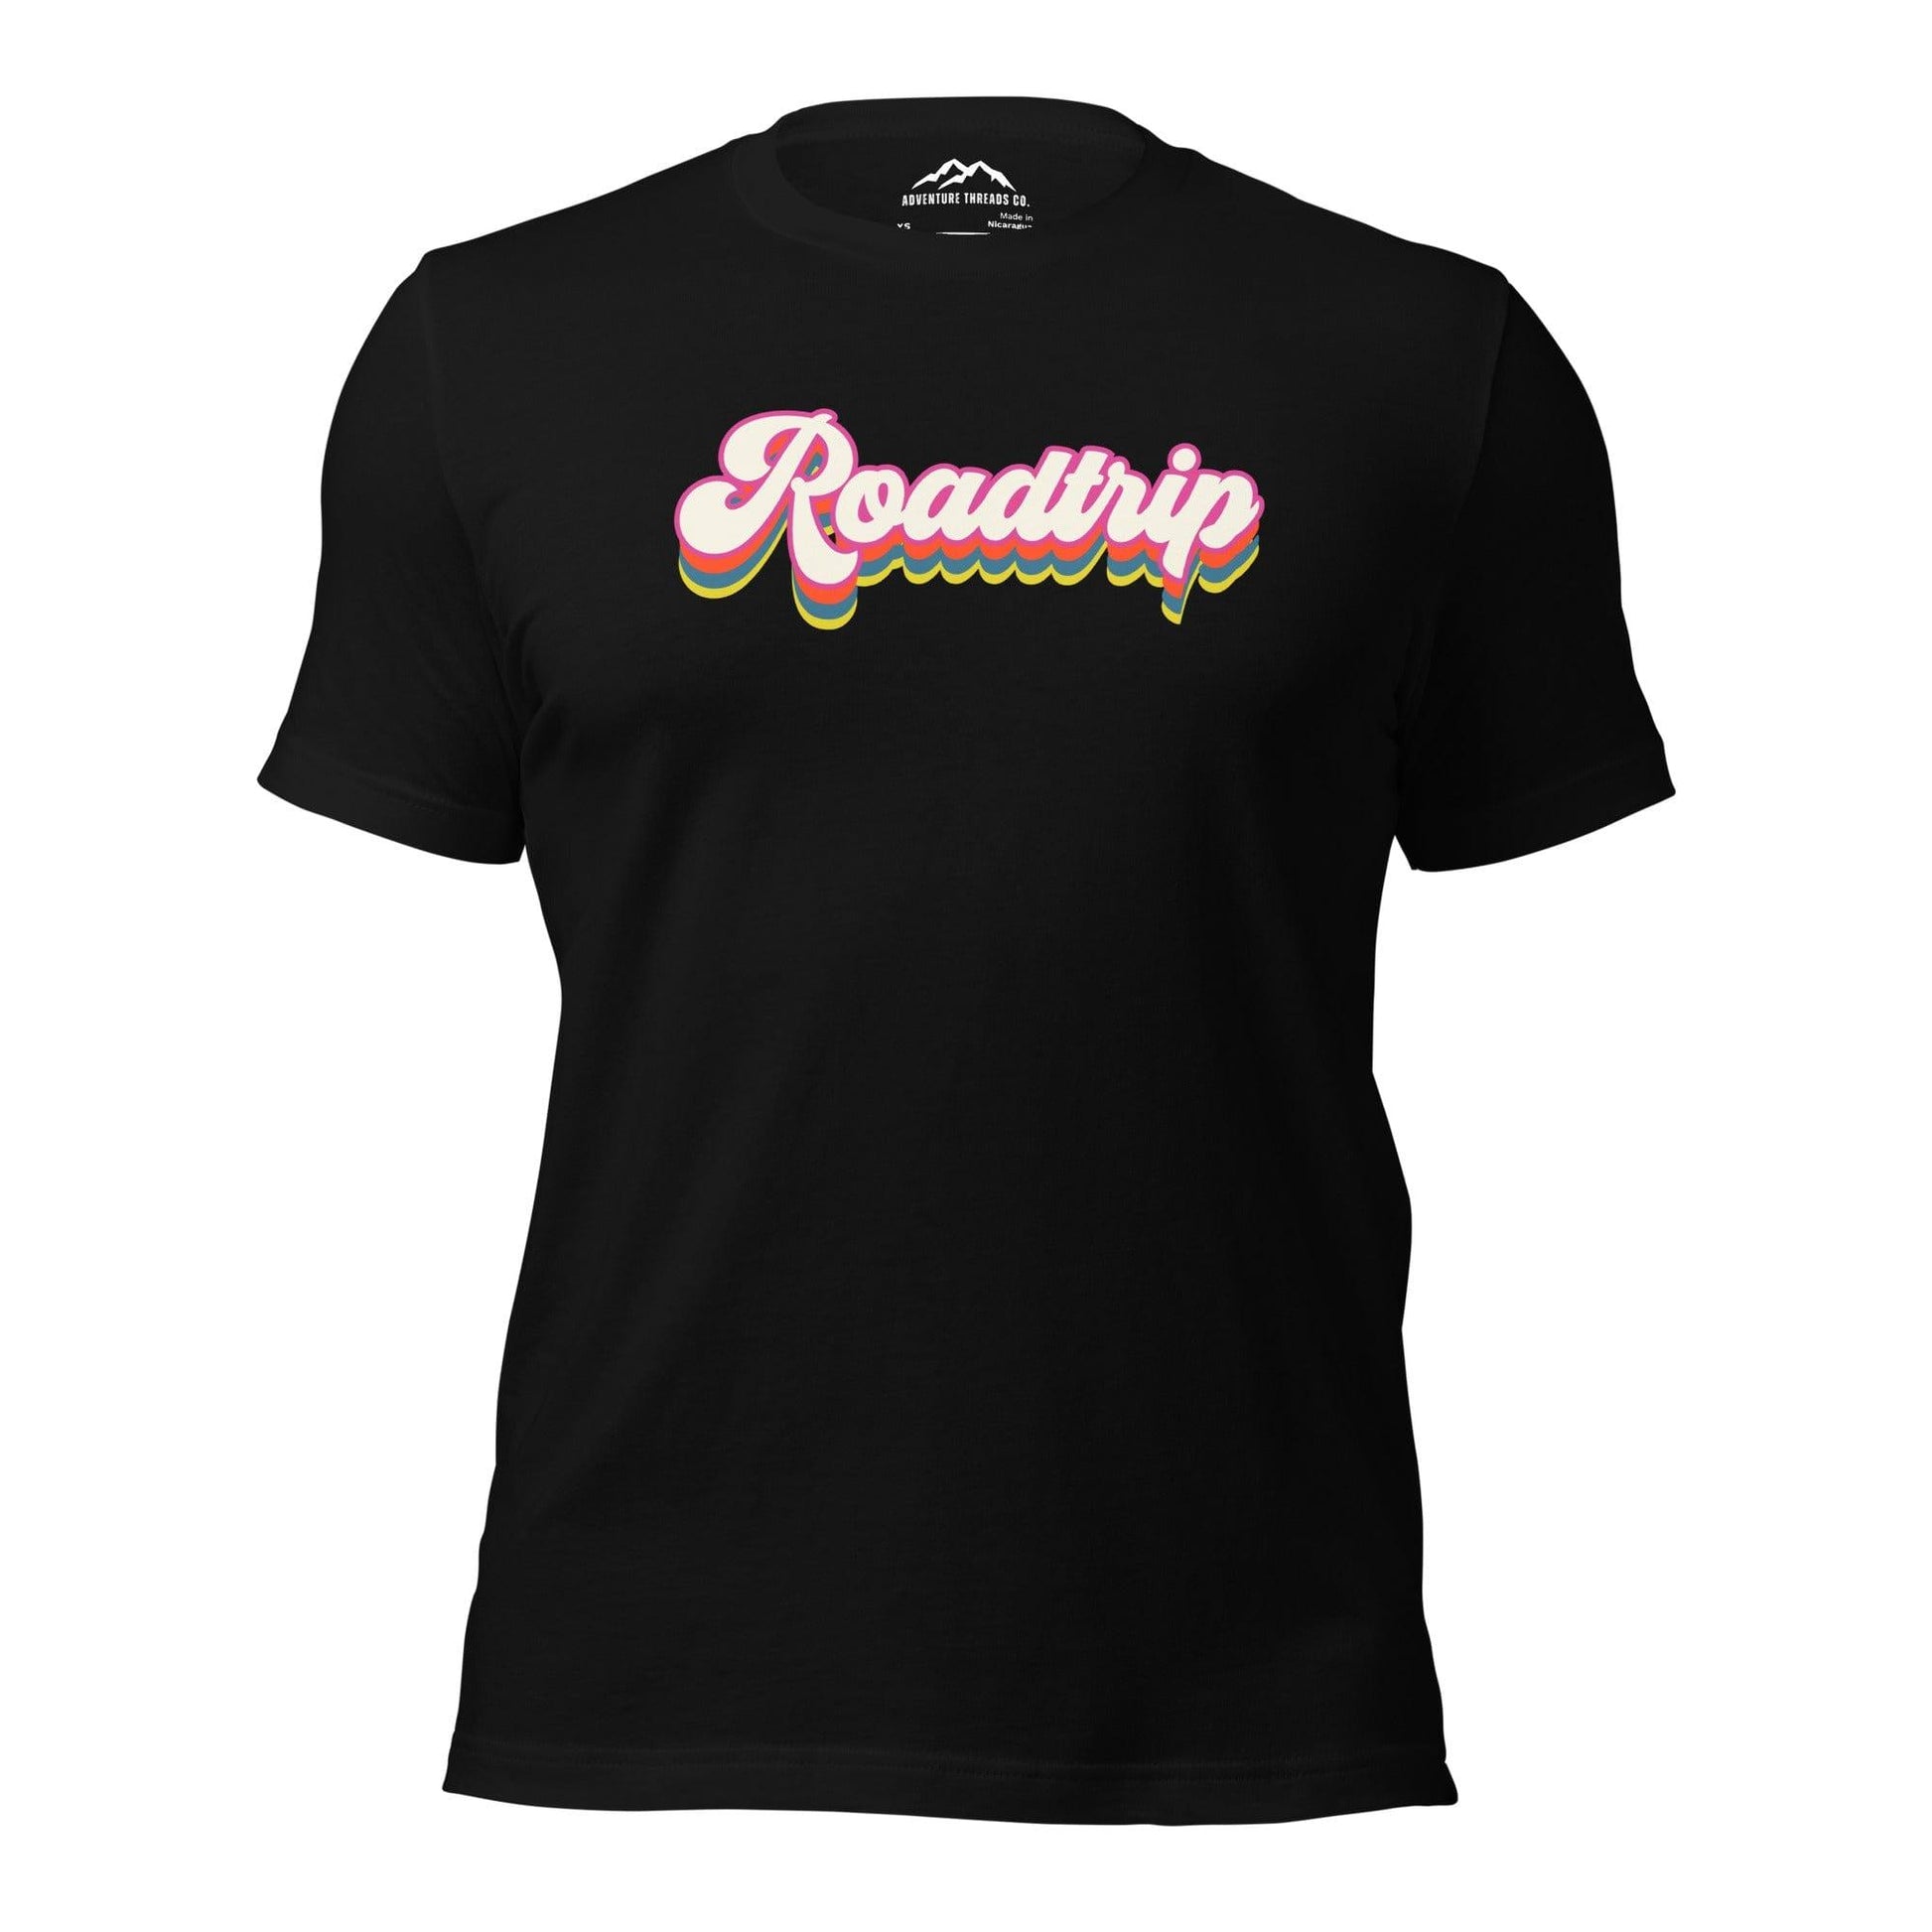 Roadtrip Groovy T-Shirt - Adventure Threads Company